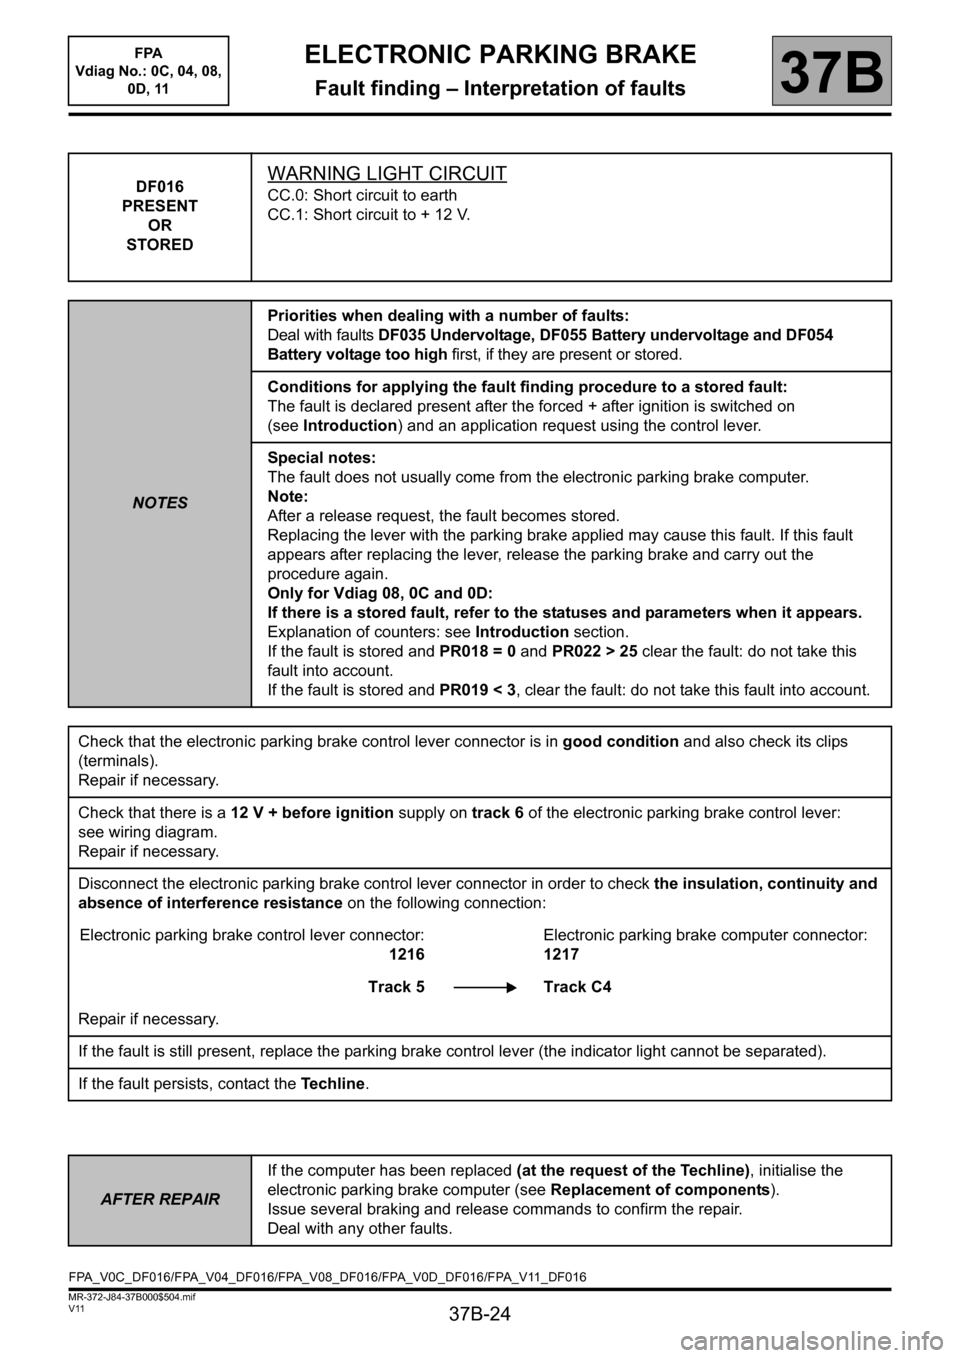 RENAULT SCENIC 2013 J95 / 3.G Electronic Parking Brake Owners Manual 37B-24
MR-372-J84-37B000$504.mif
V11
ELECTRONIC PARKING BRAKE
Fault finding – Interpretation of faults
FPA  
Vdiag No.: 0C, 04, 08, 
0D, 11
37B
DF016
PRESENT
OR
STOREDWARNING LIGHT CIRCUIT
CC.0: Sho